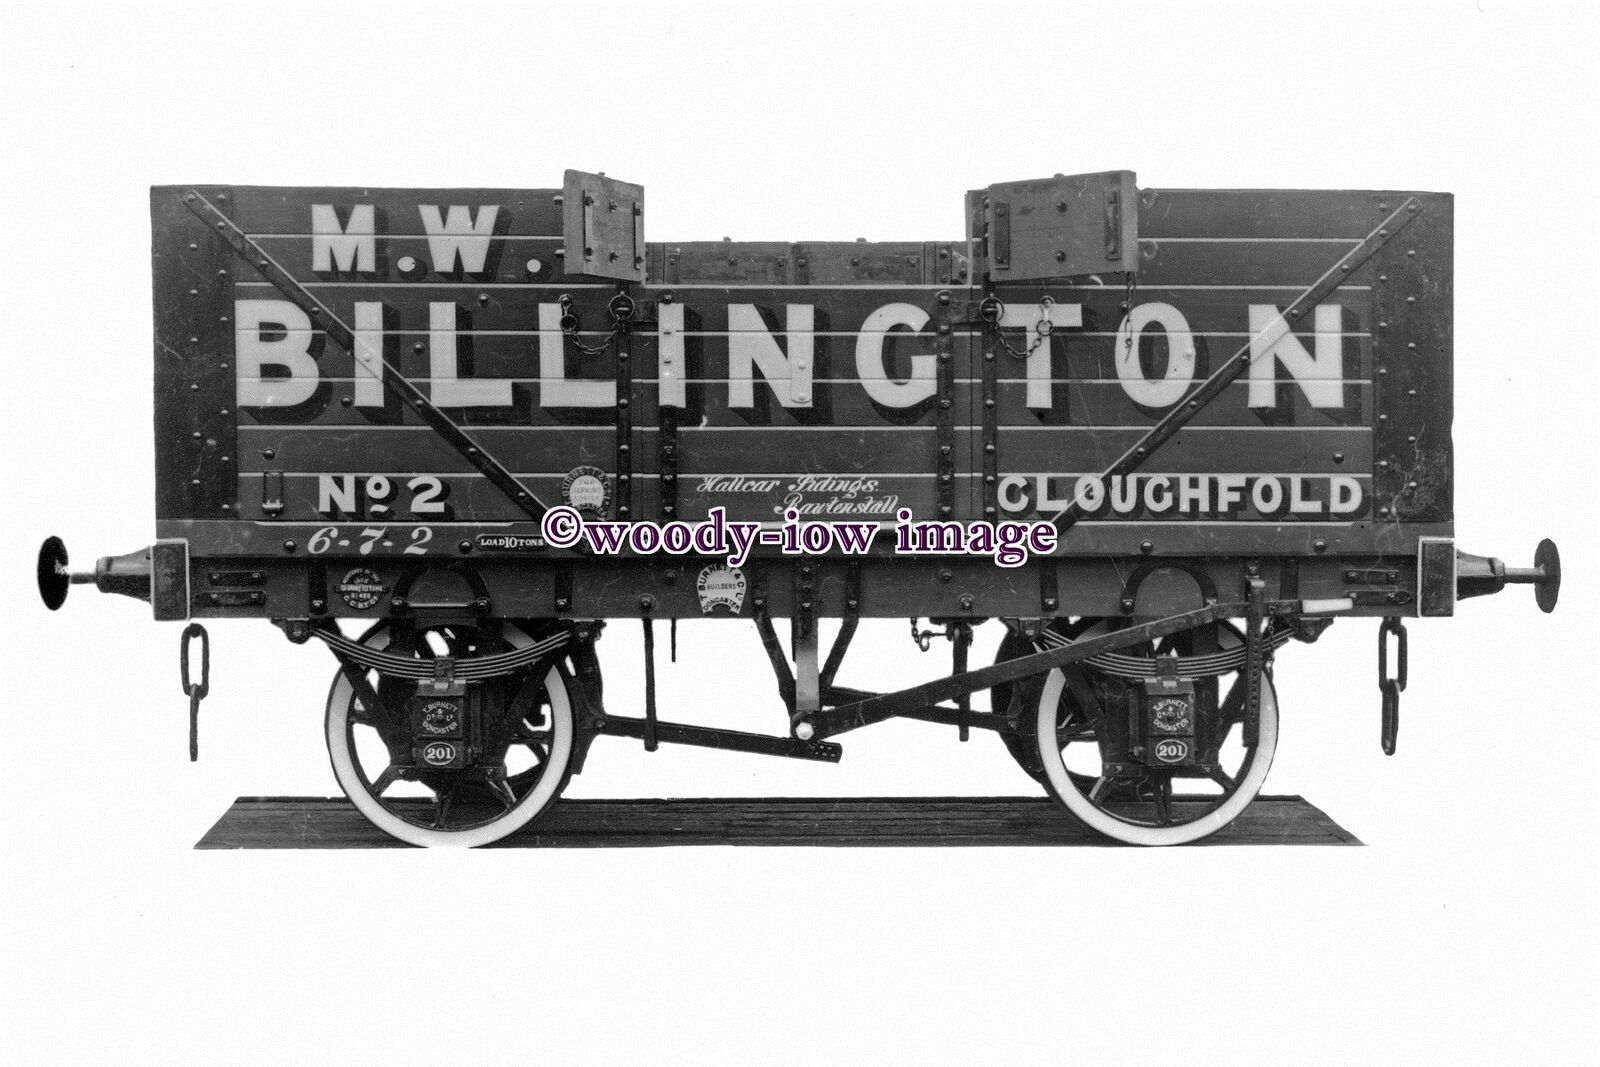 pu3225 - Wagon - No.2 M.W.Billington, Cloughfold - print 6x4